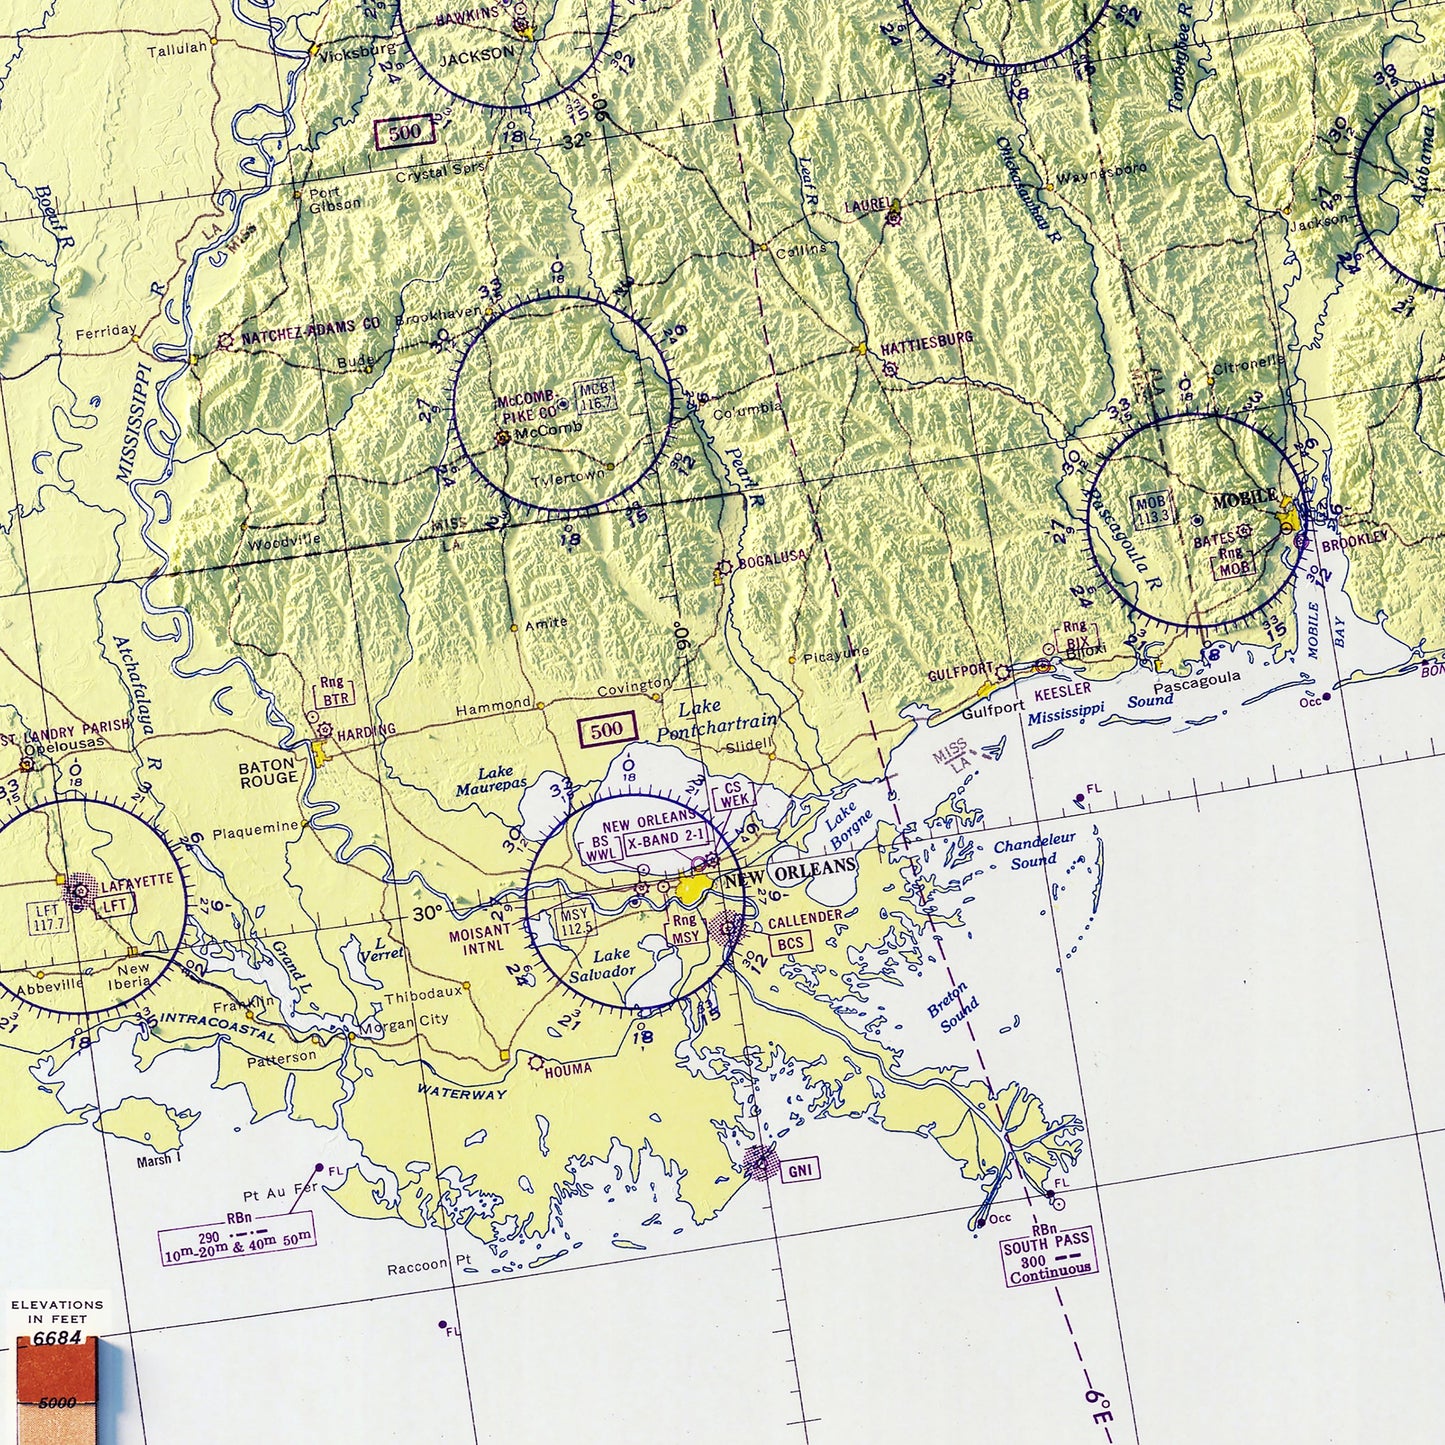 Aeronautical Chart - USA Southeast 1950 Shaded Relief Map